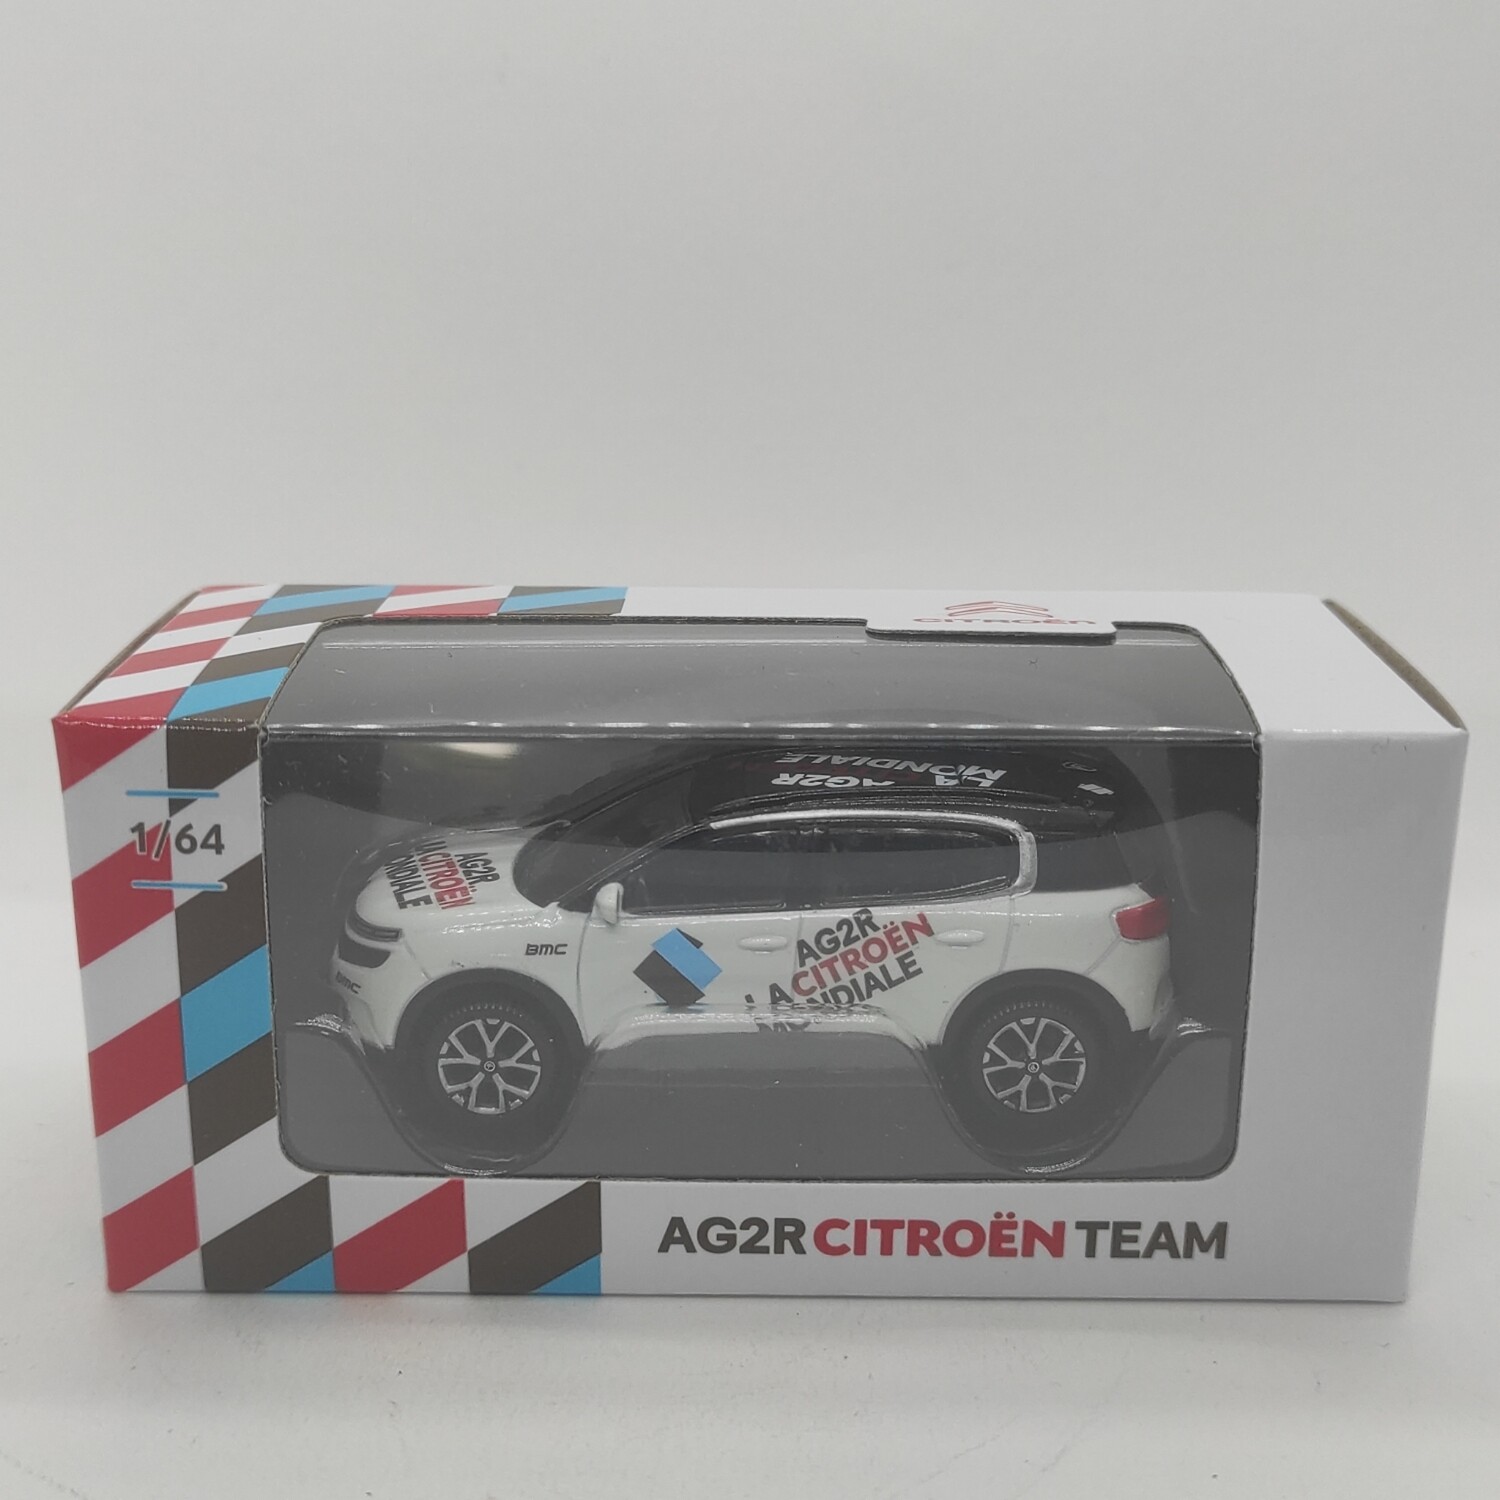 Citroen C5 Aircross 2018 AG2R